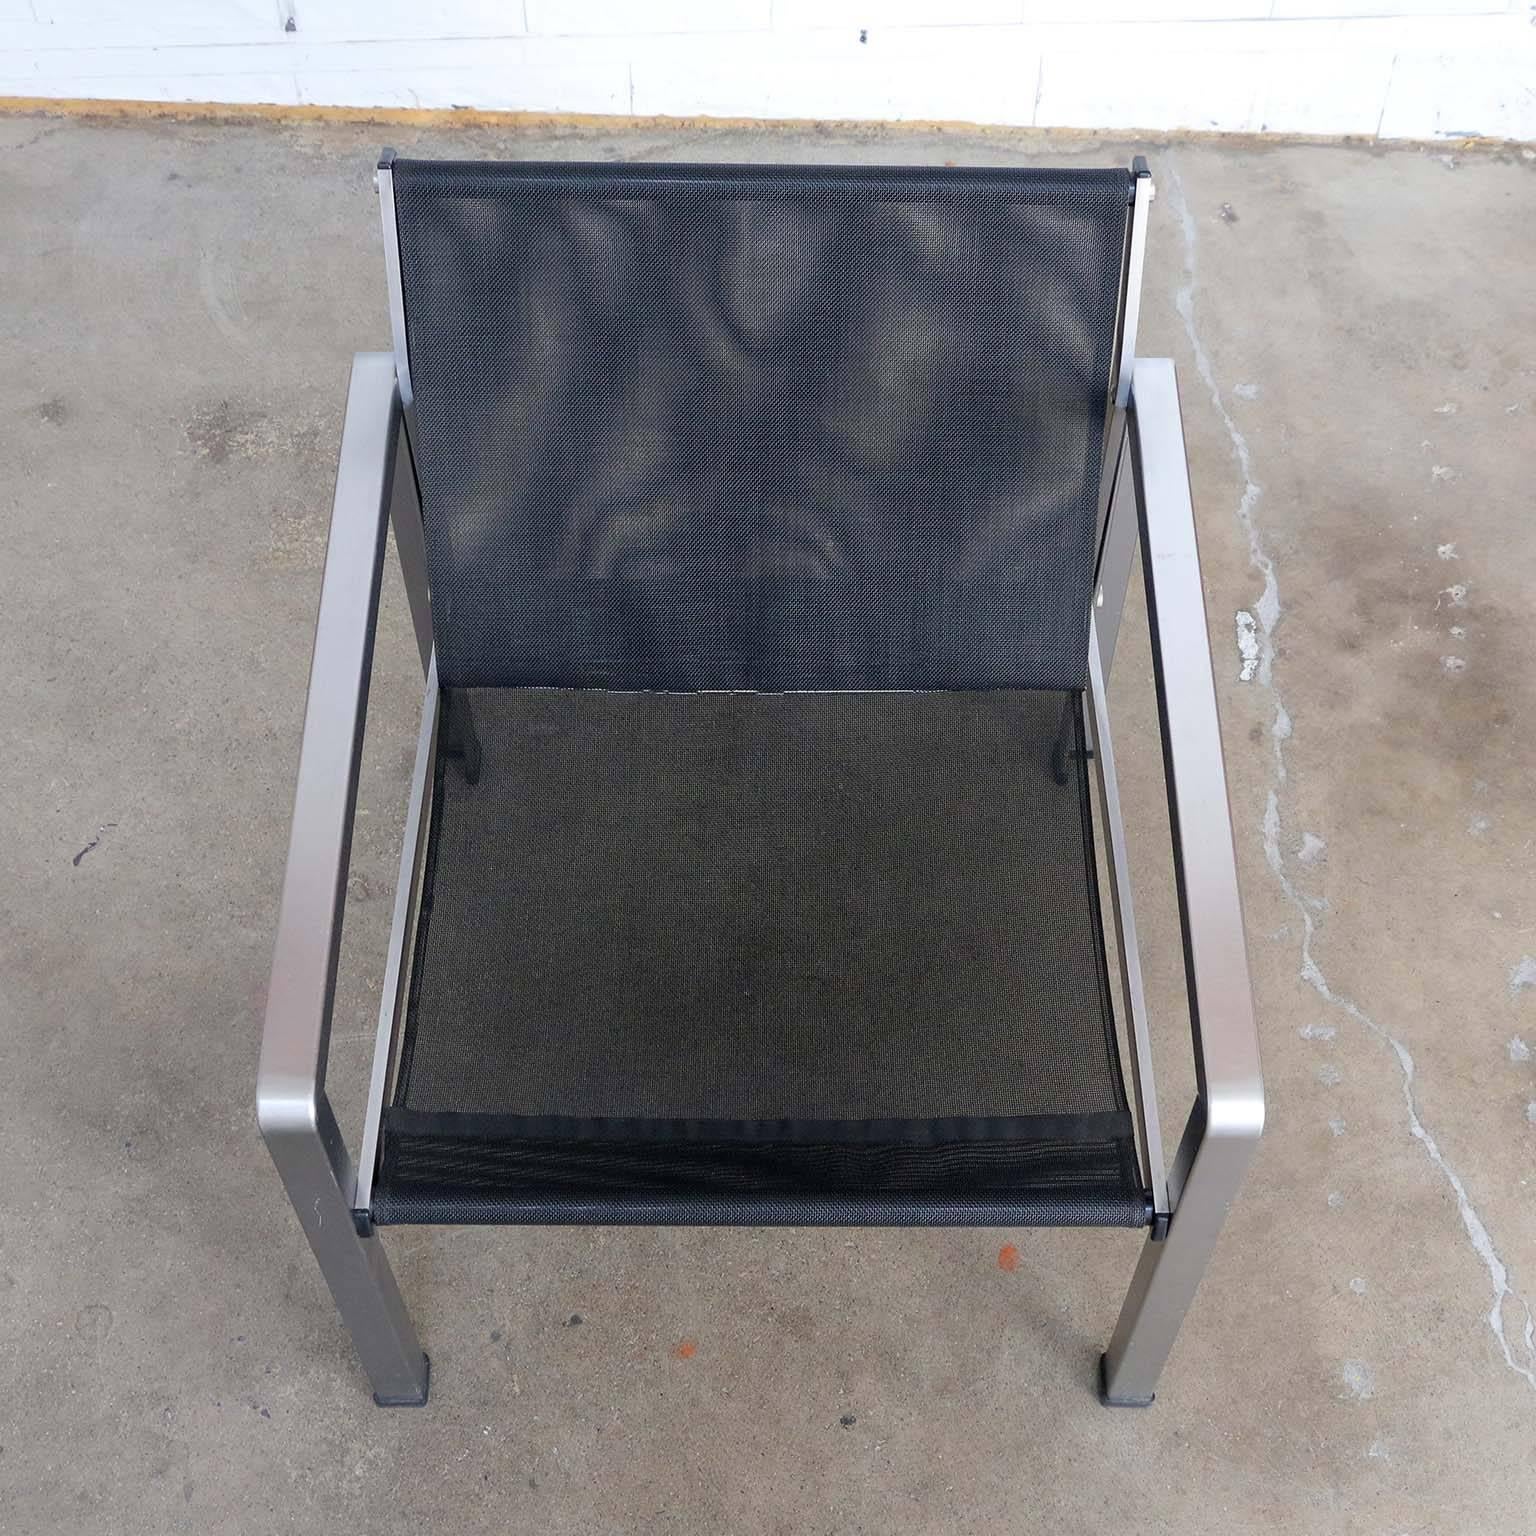 Giuseppe Raimondi Design Modern Aluminum Cube Chairs For Sale 5